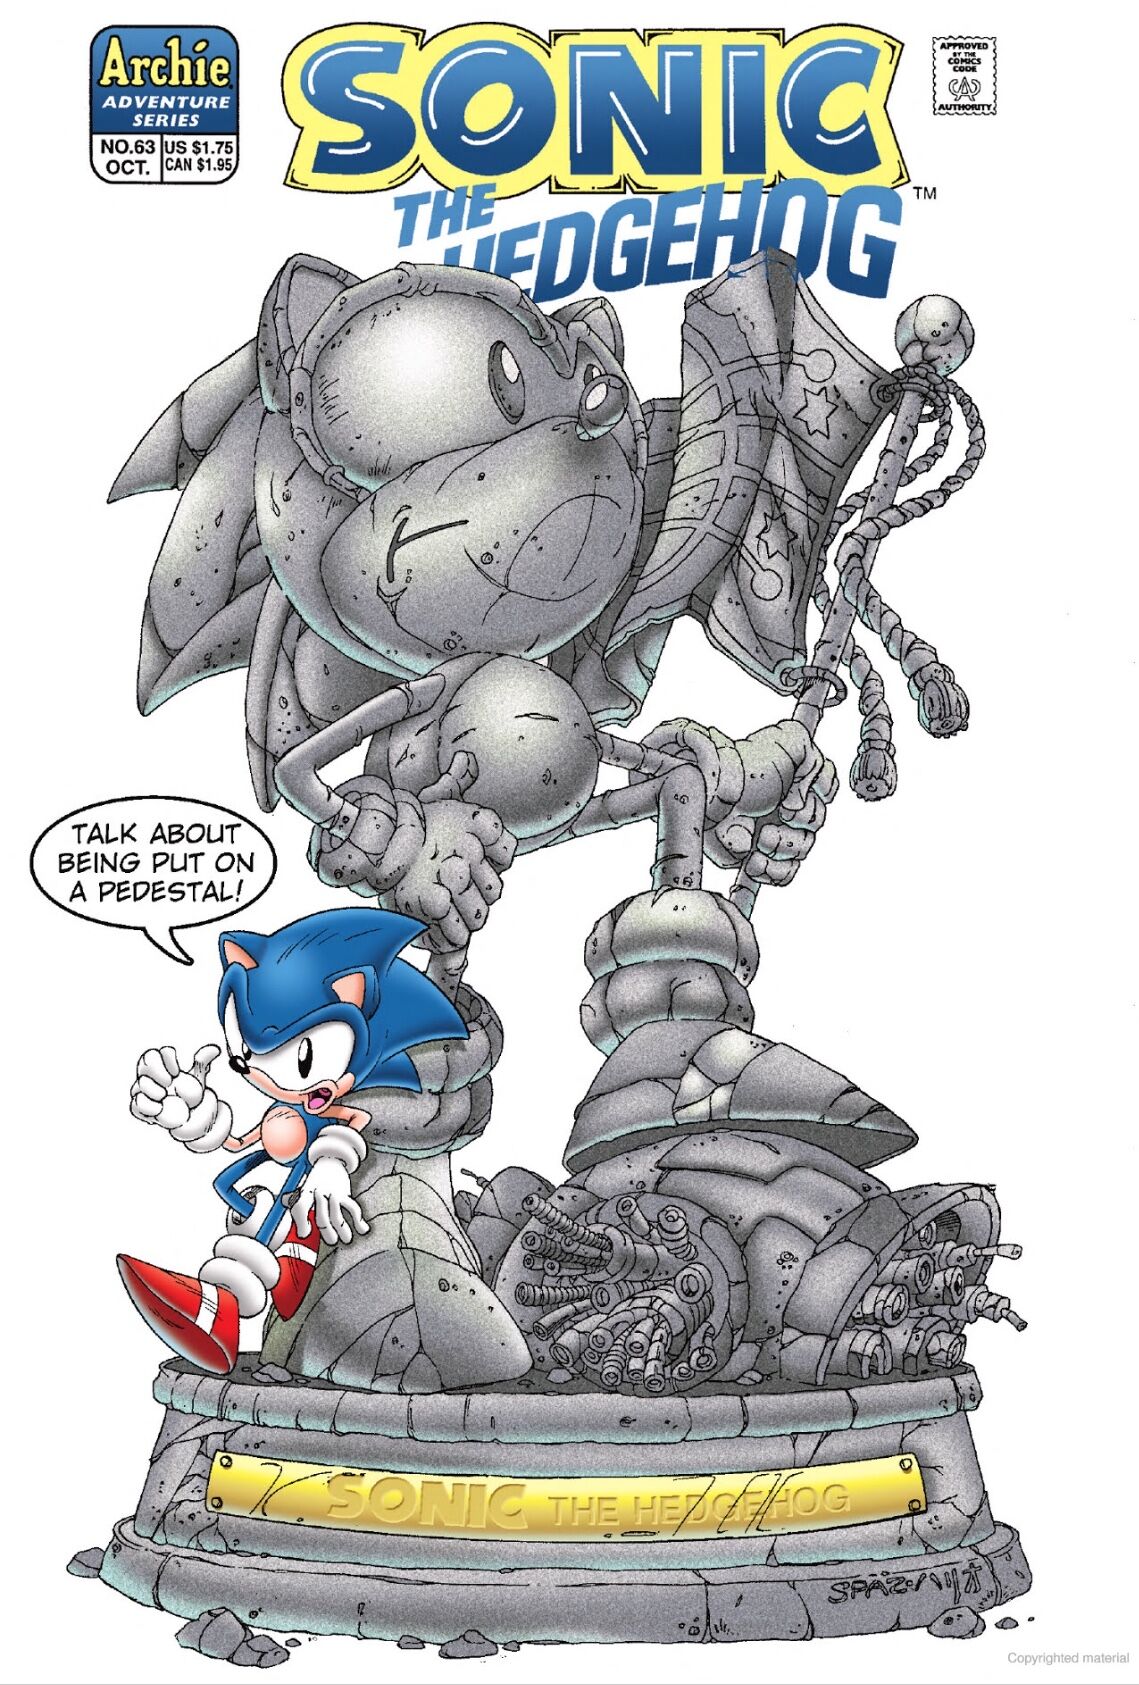 Image - 835973], Archie Sonic Comics